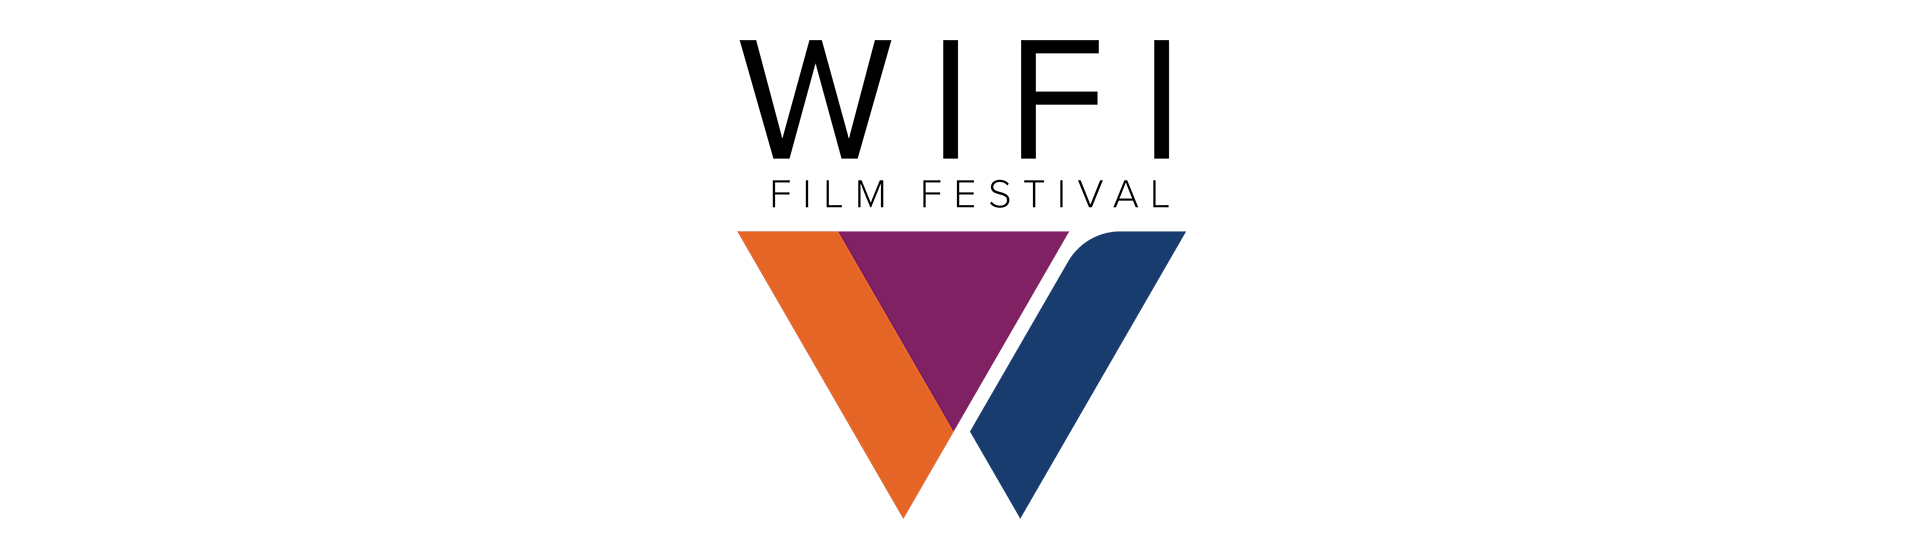 Wifi Film Festival logo